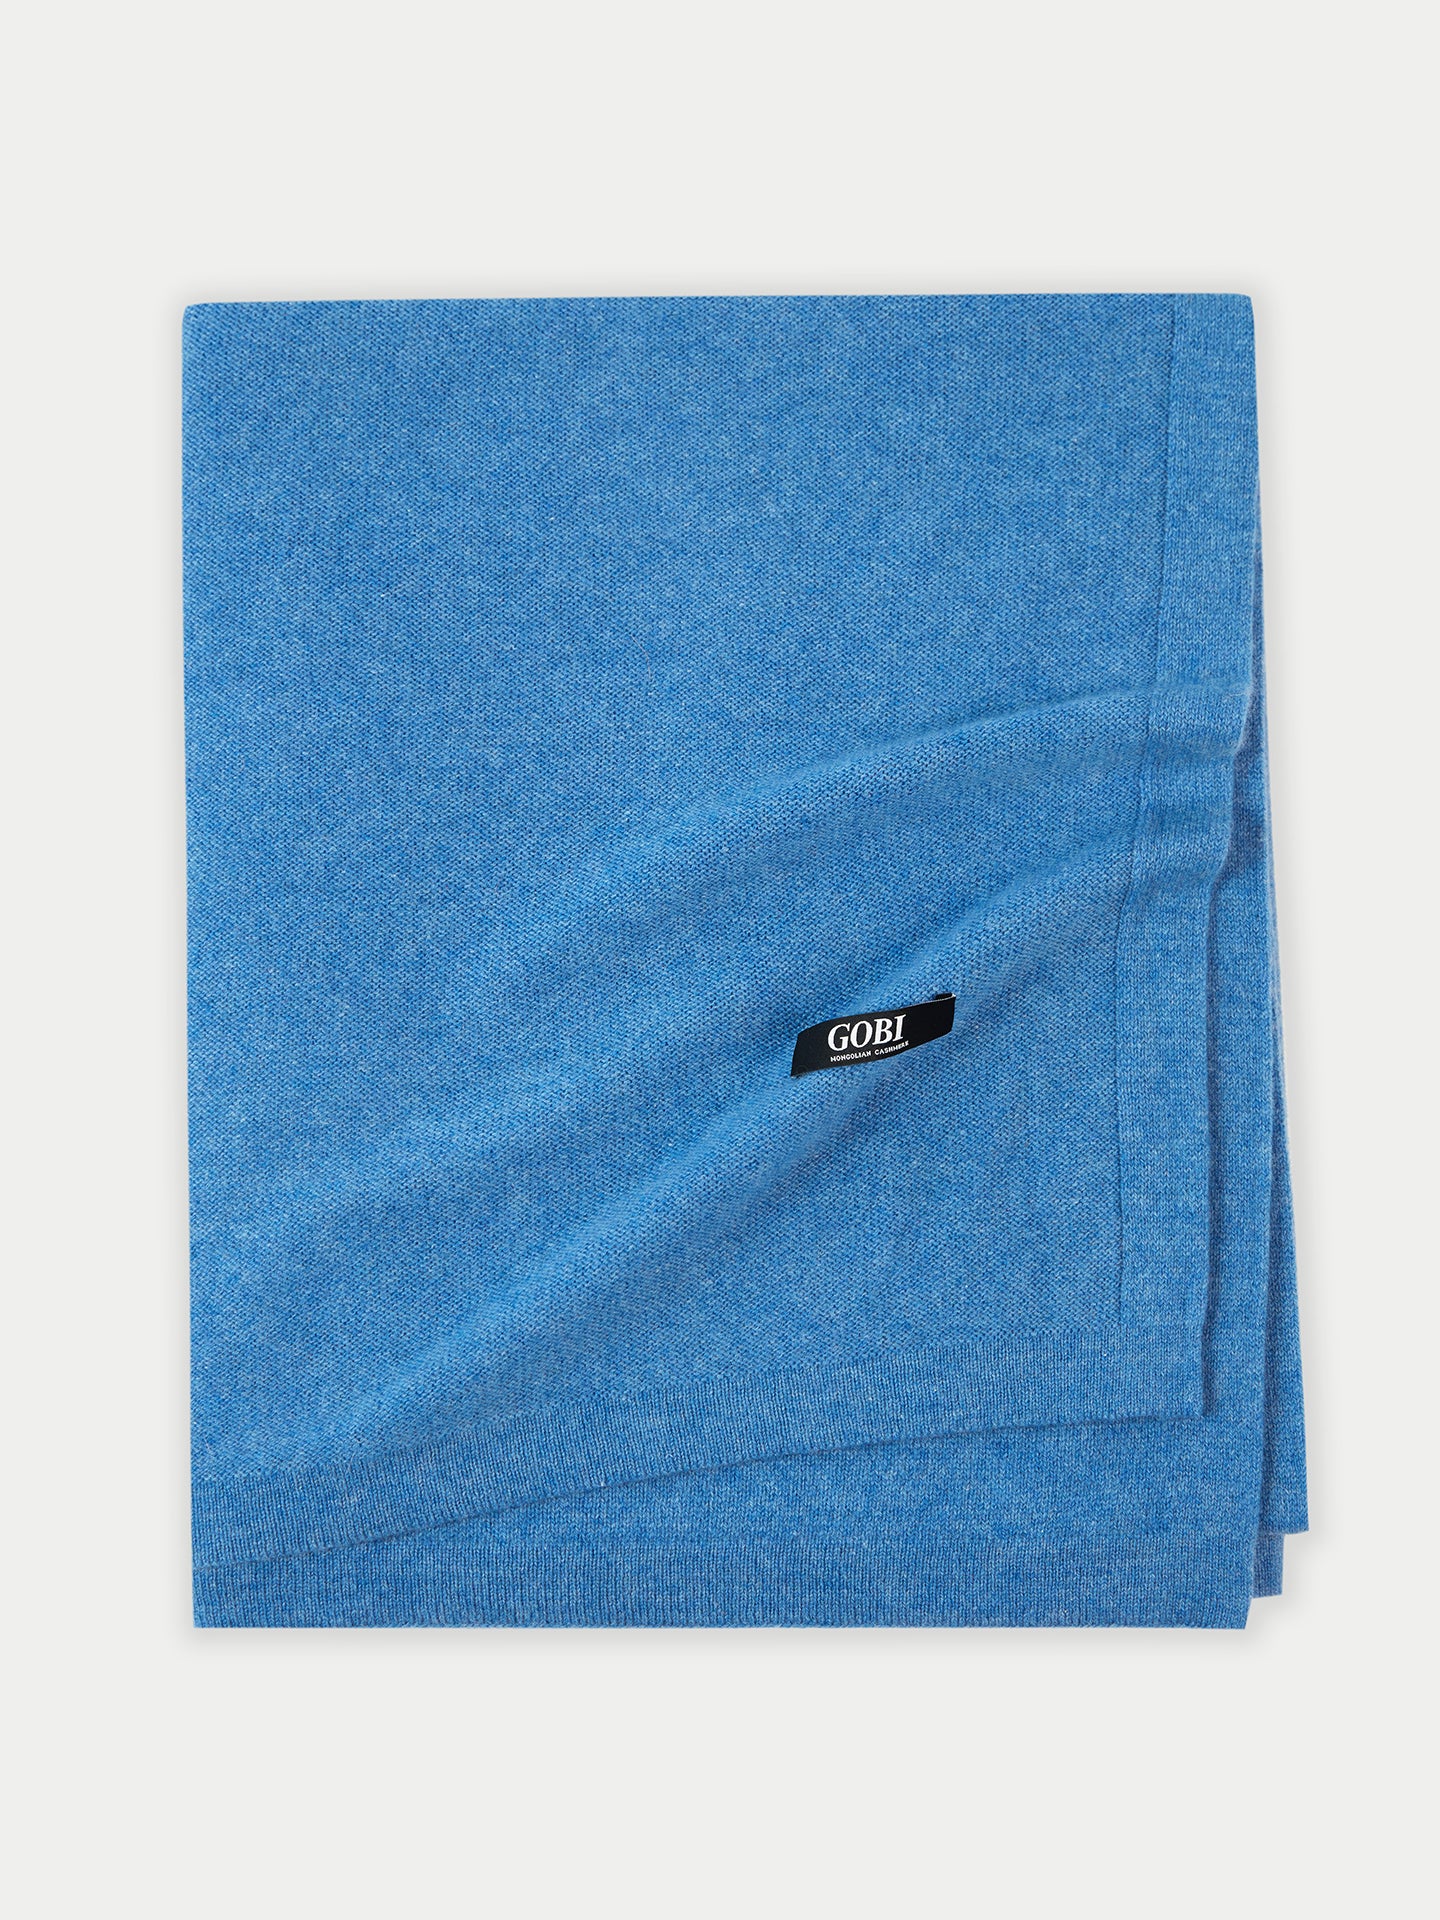 Cashmere Jersey Knit Blanket Blue  - Gobi Cashmere